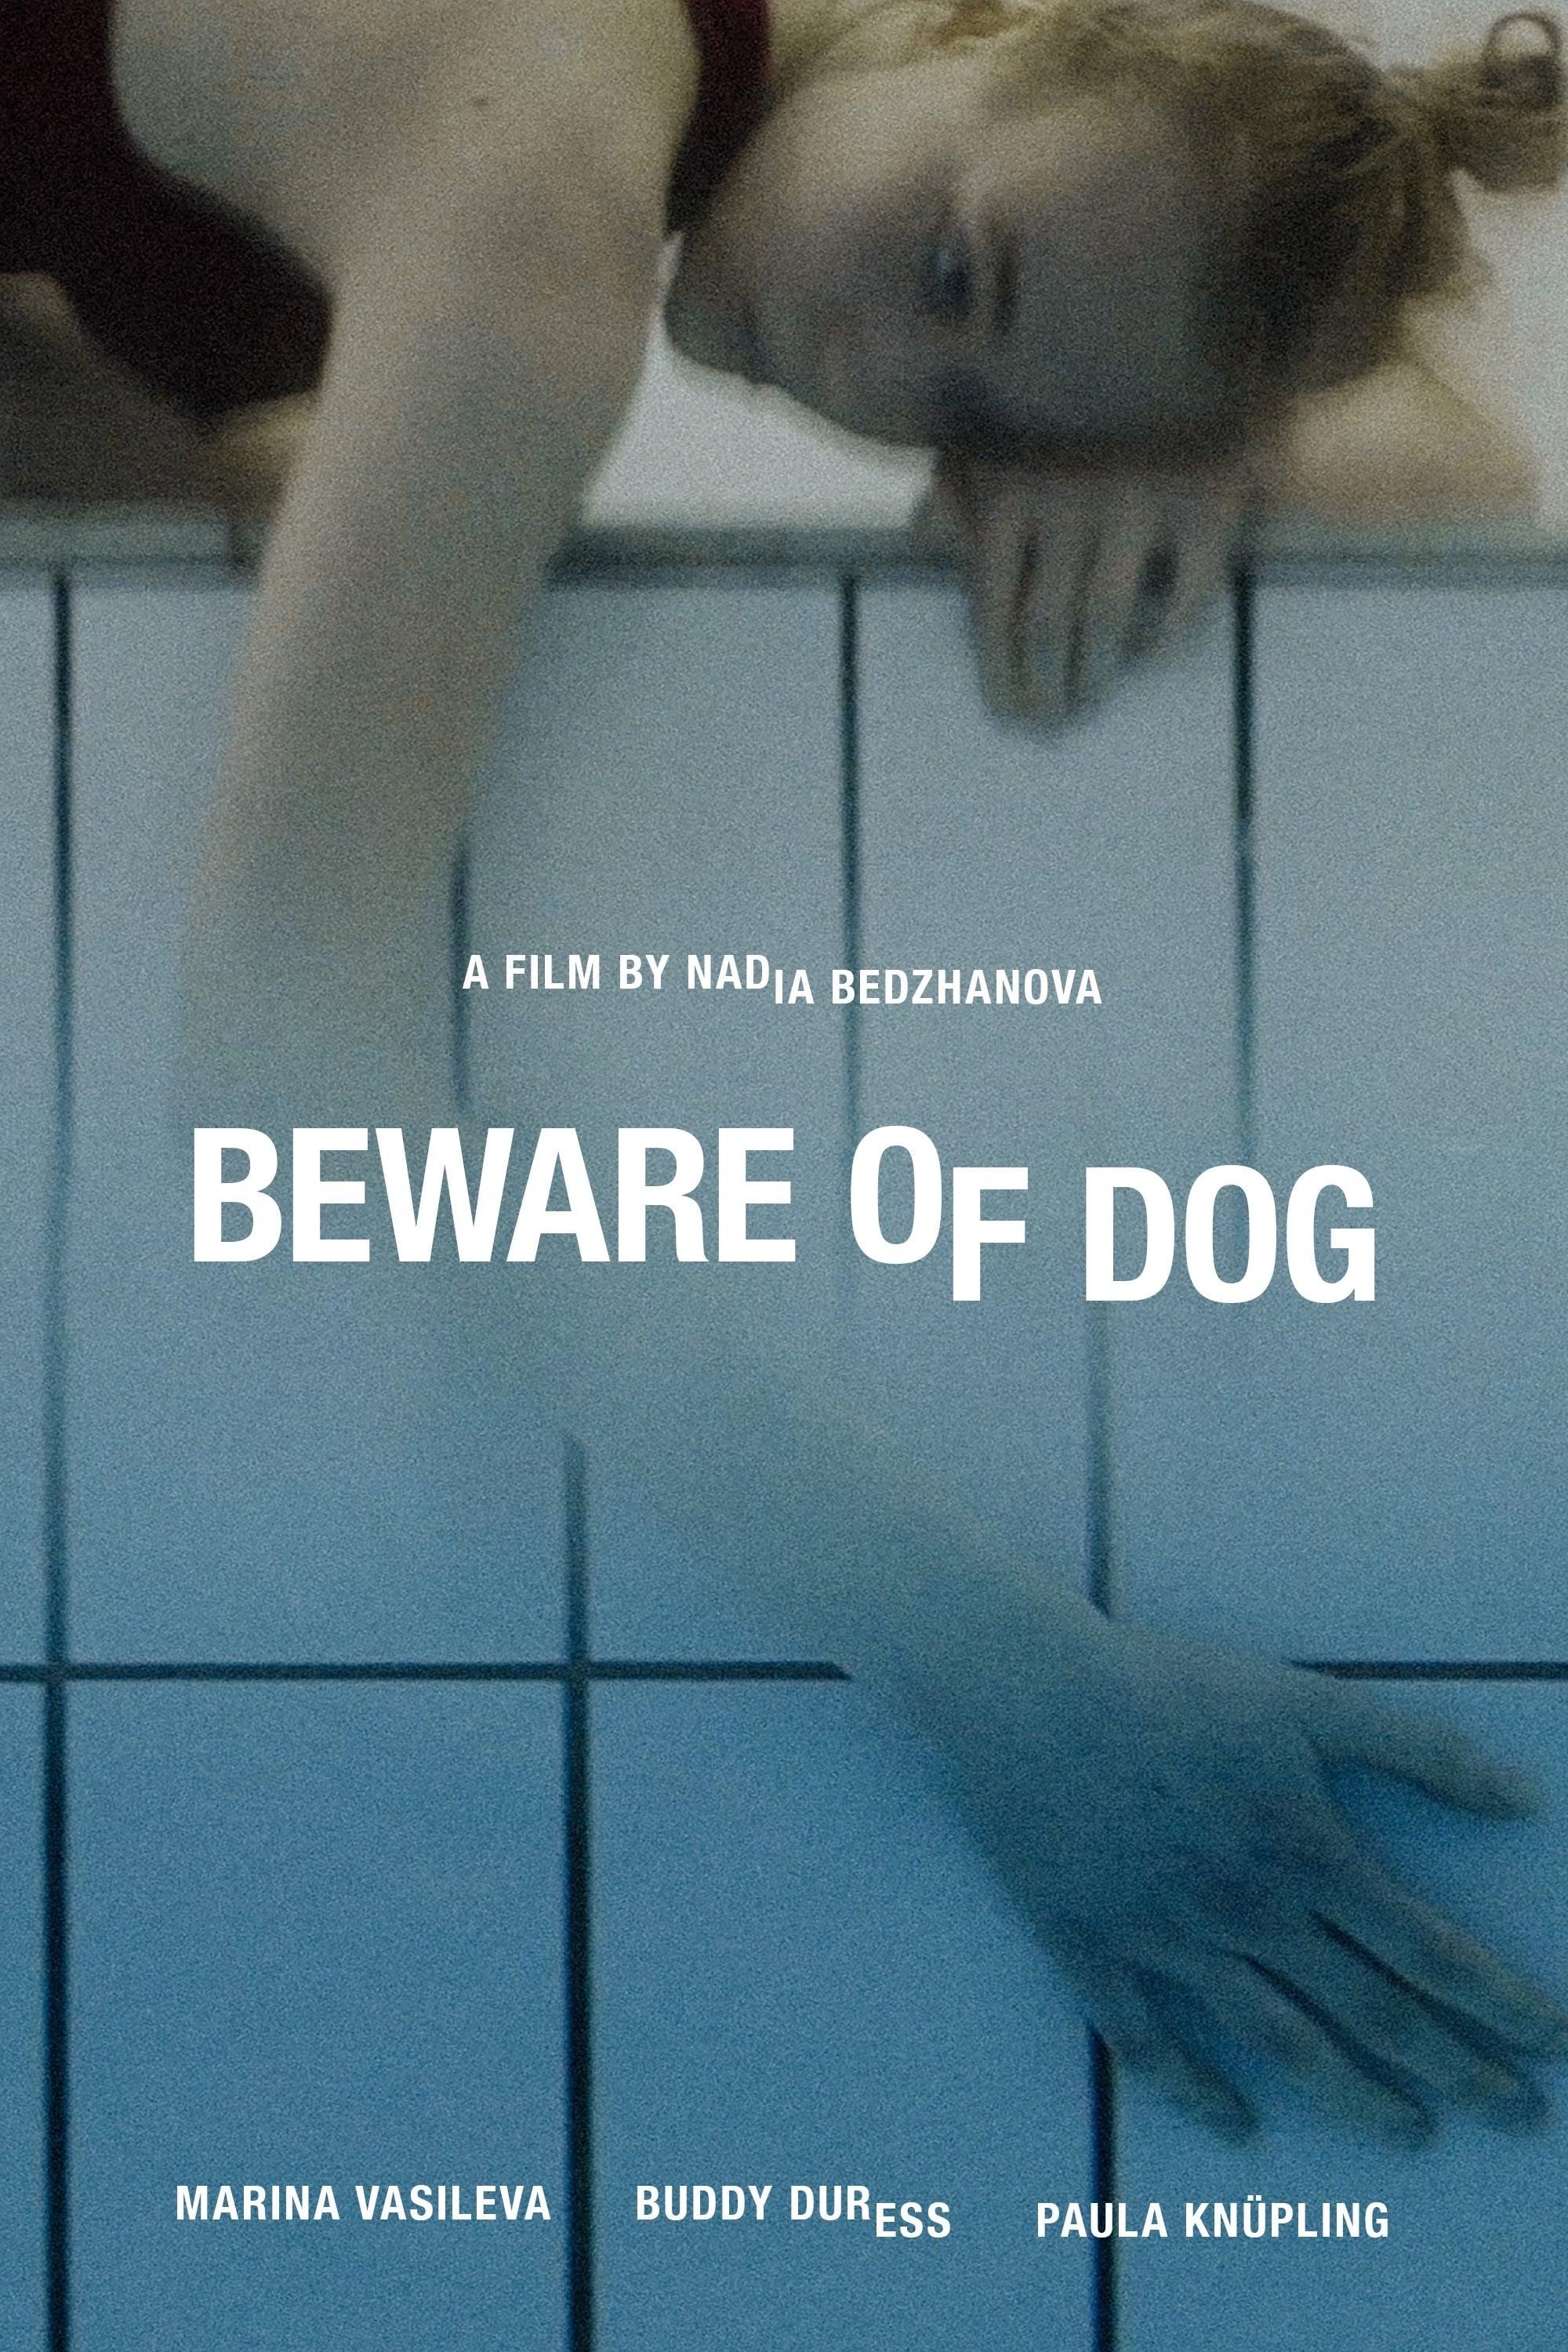 Beware of Dog poster